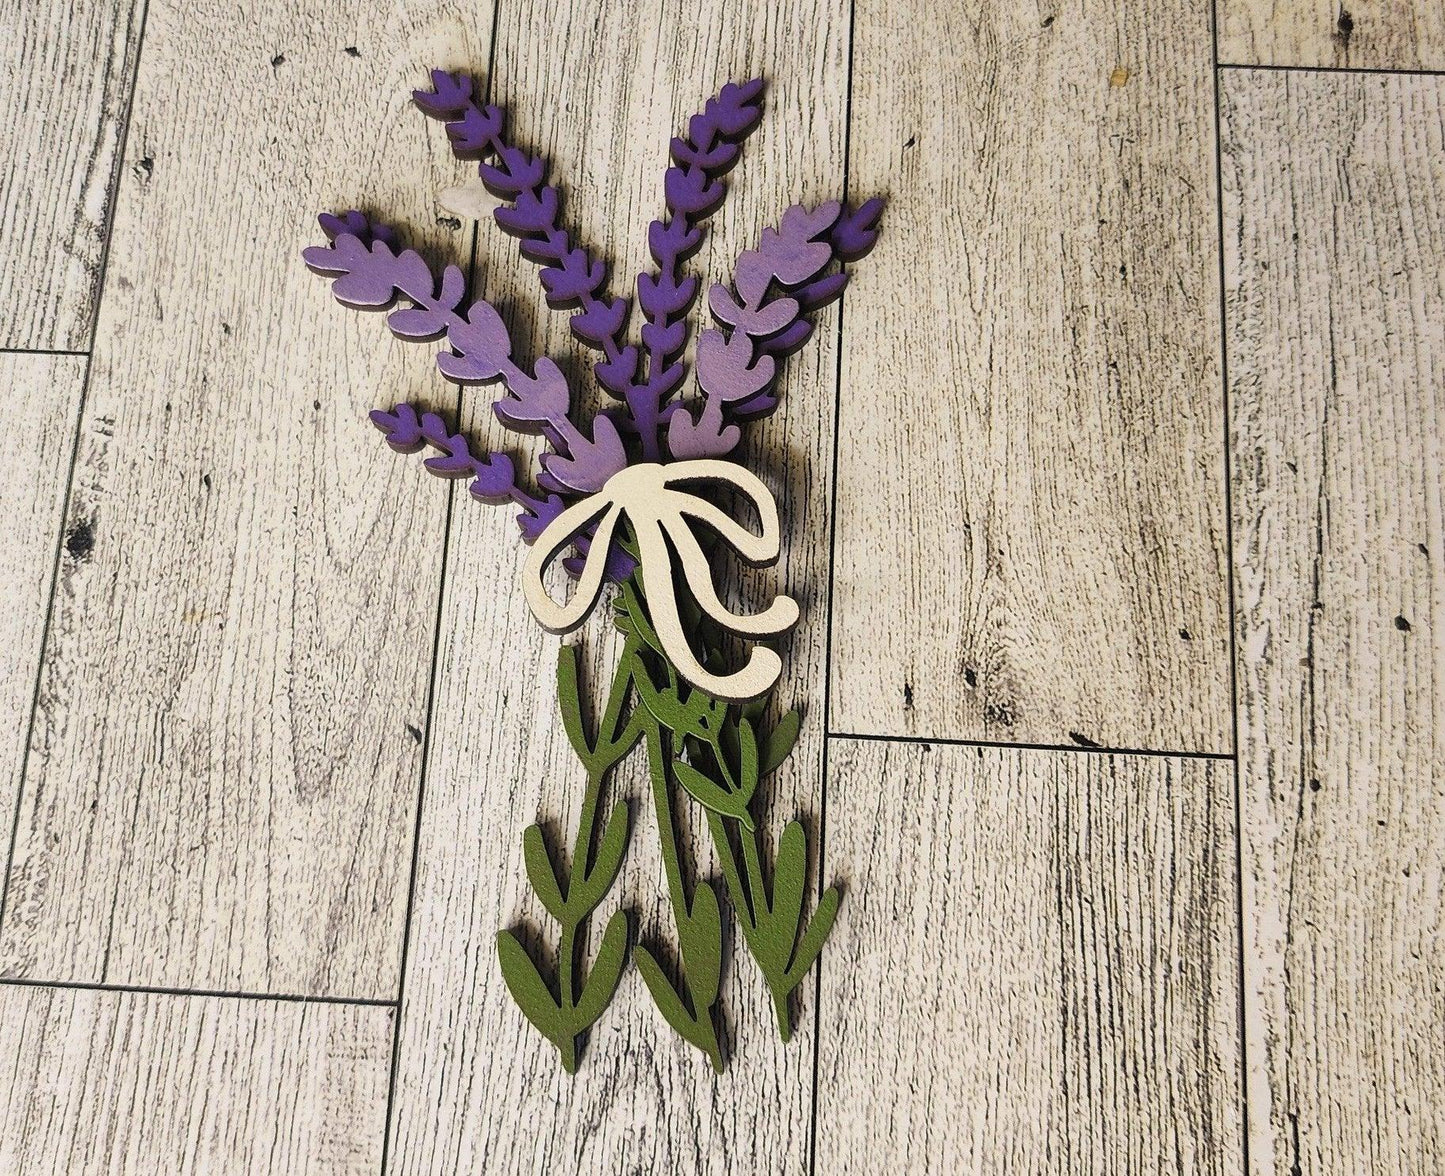 Premade Lavender Tiered Tray Decor, Fresh Cut Lavender display - RusticFarmhouseDecor